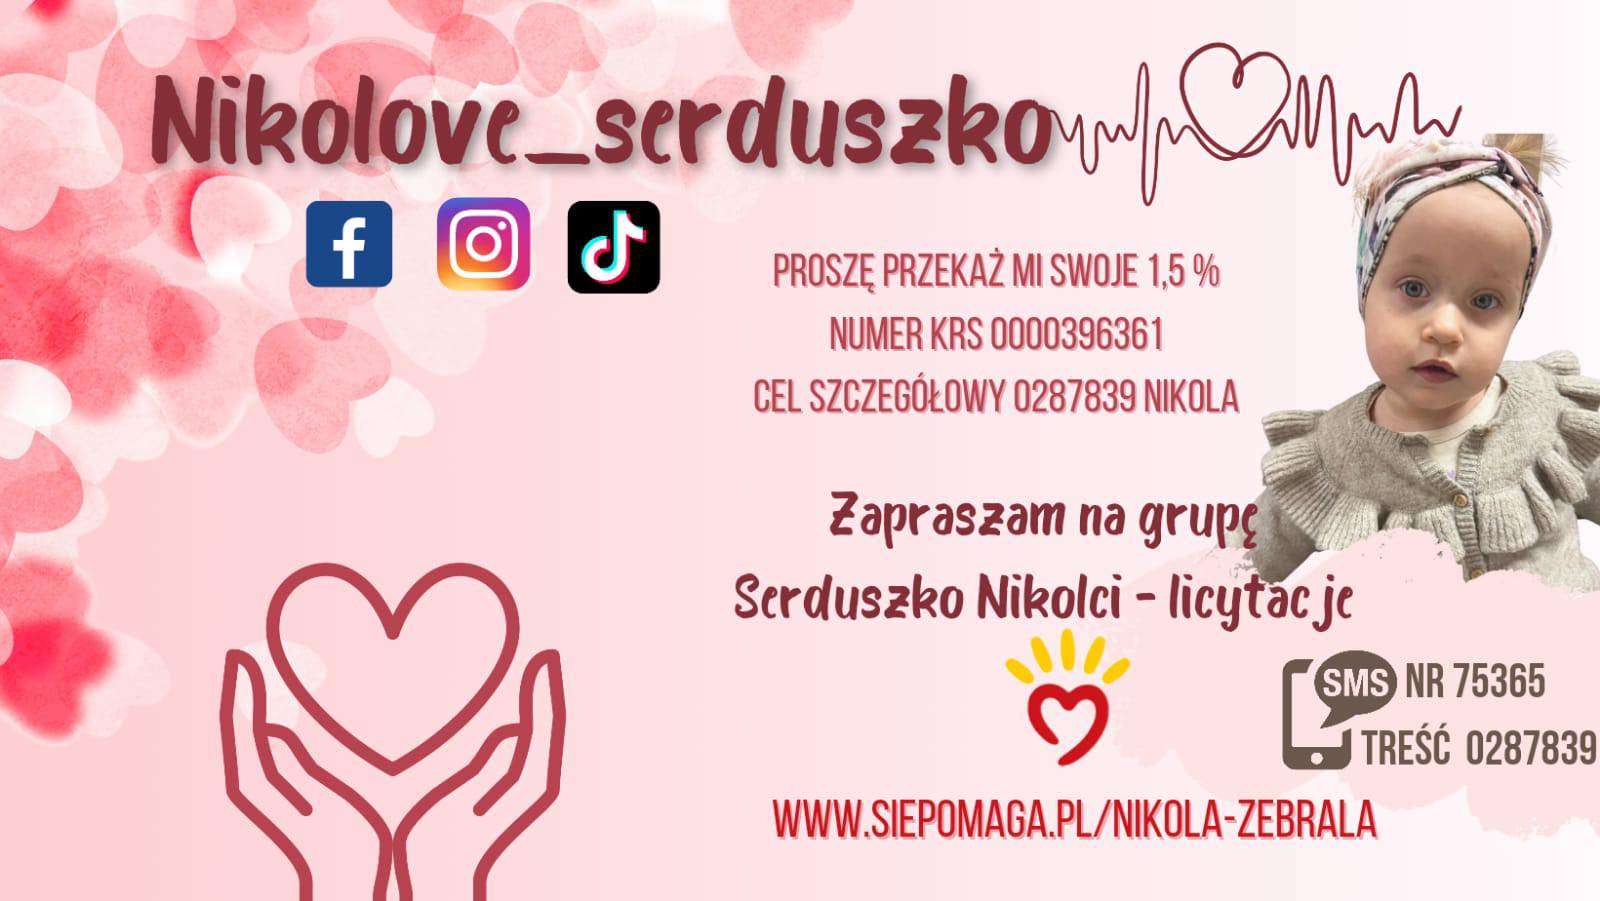 Facebook / Nikolove_serduszko